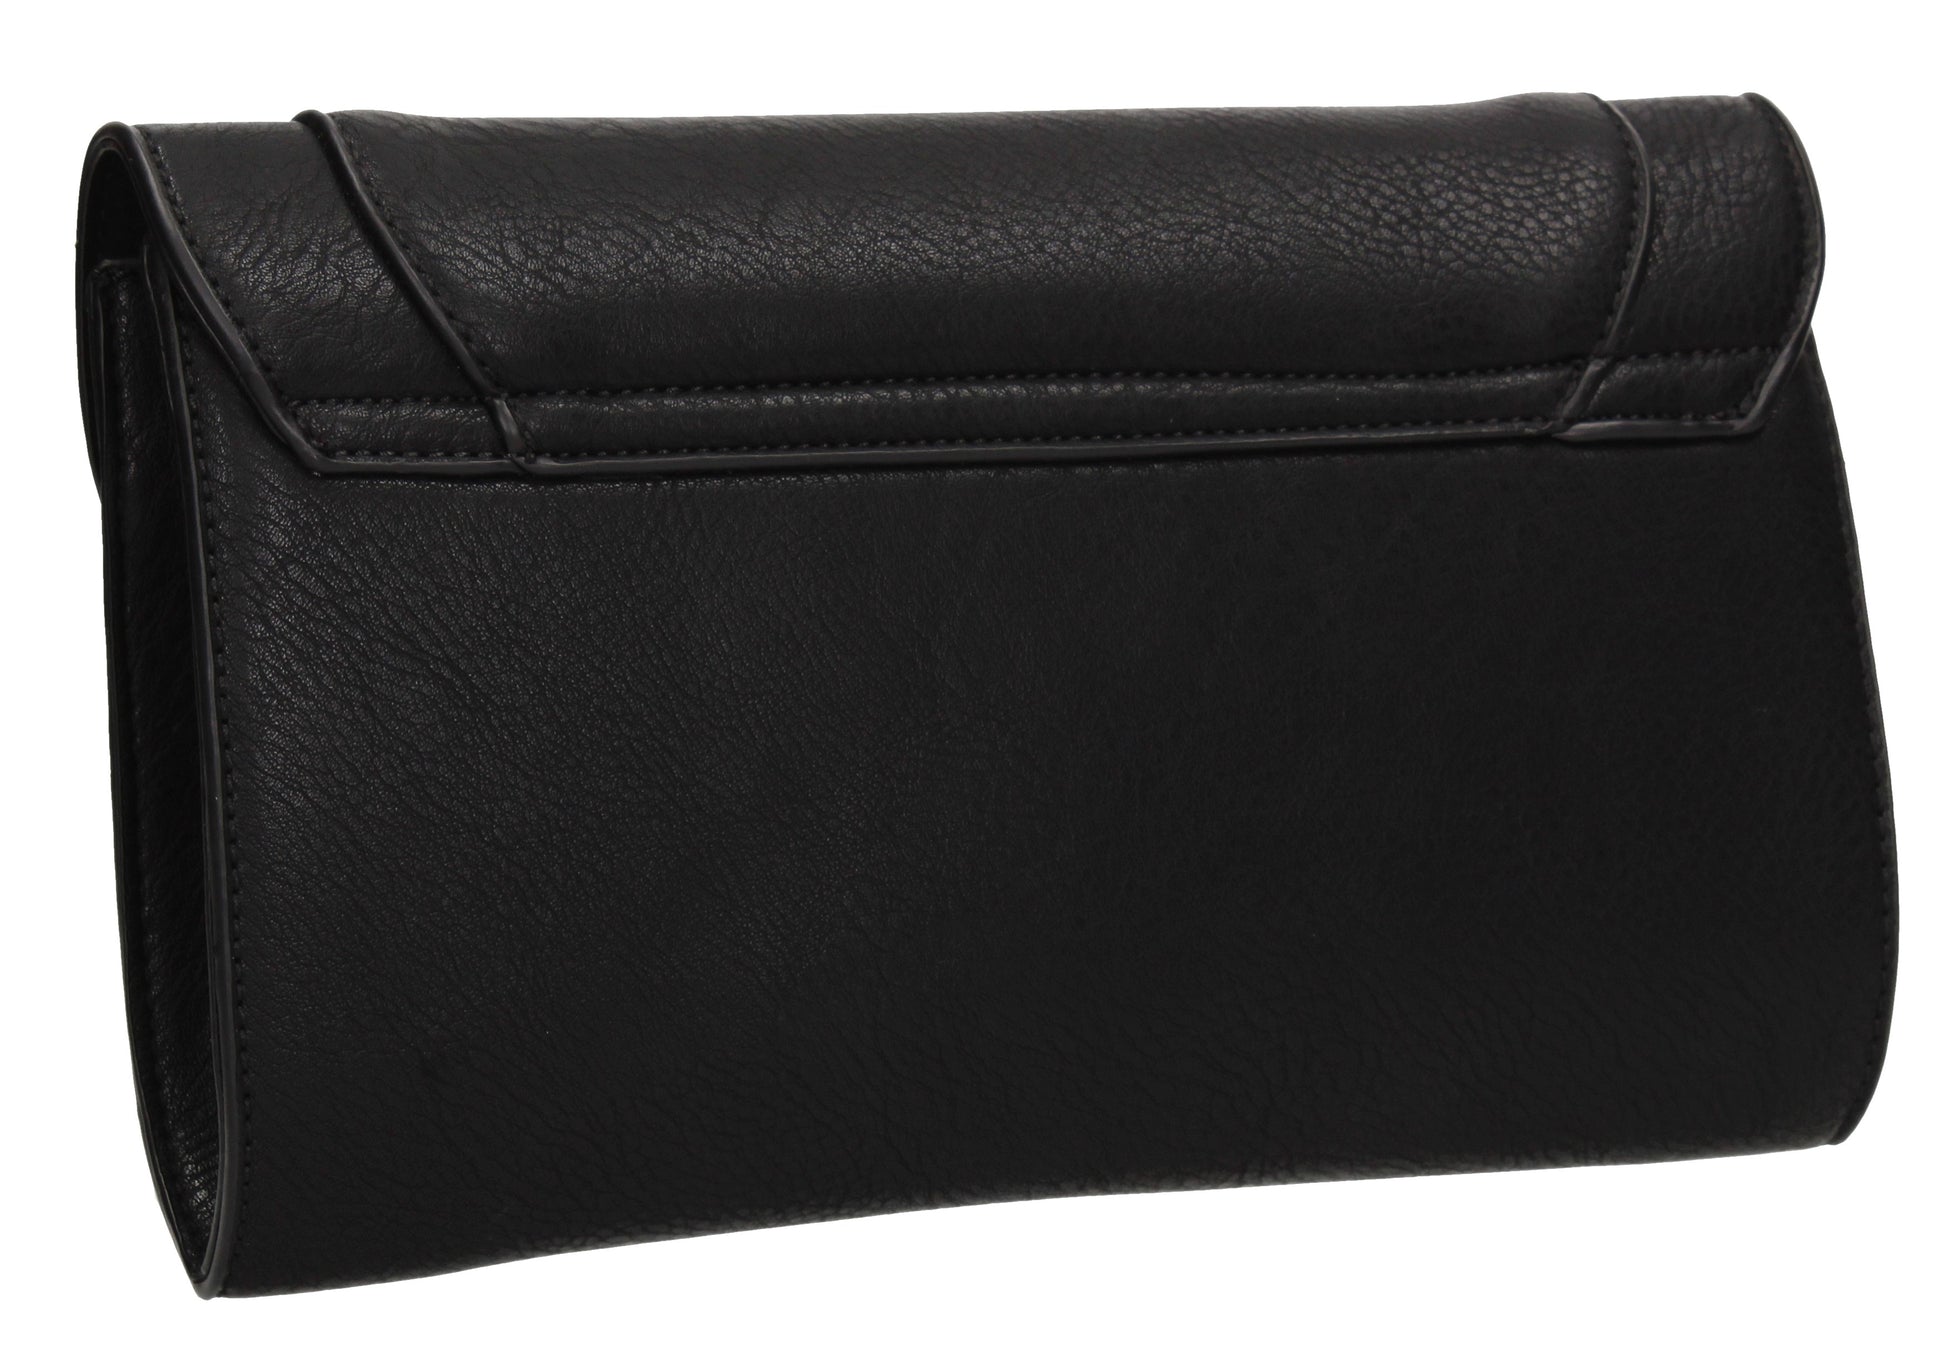 SWANKYSWANS Tiare Onyx Style Clutch Bag Black Cute Cheap Clutch Bag For Weddings School and Work